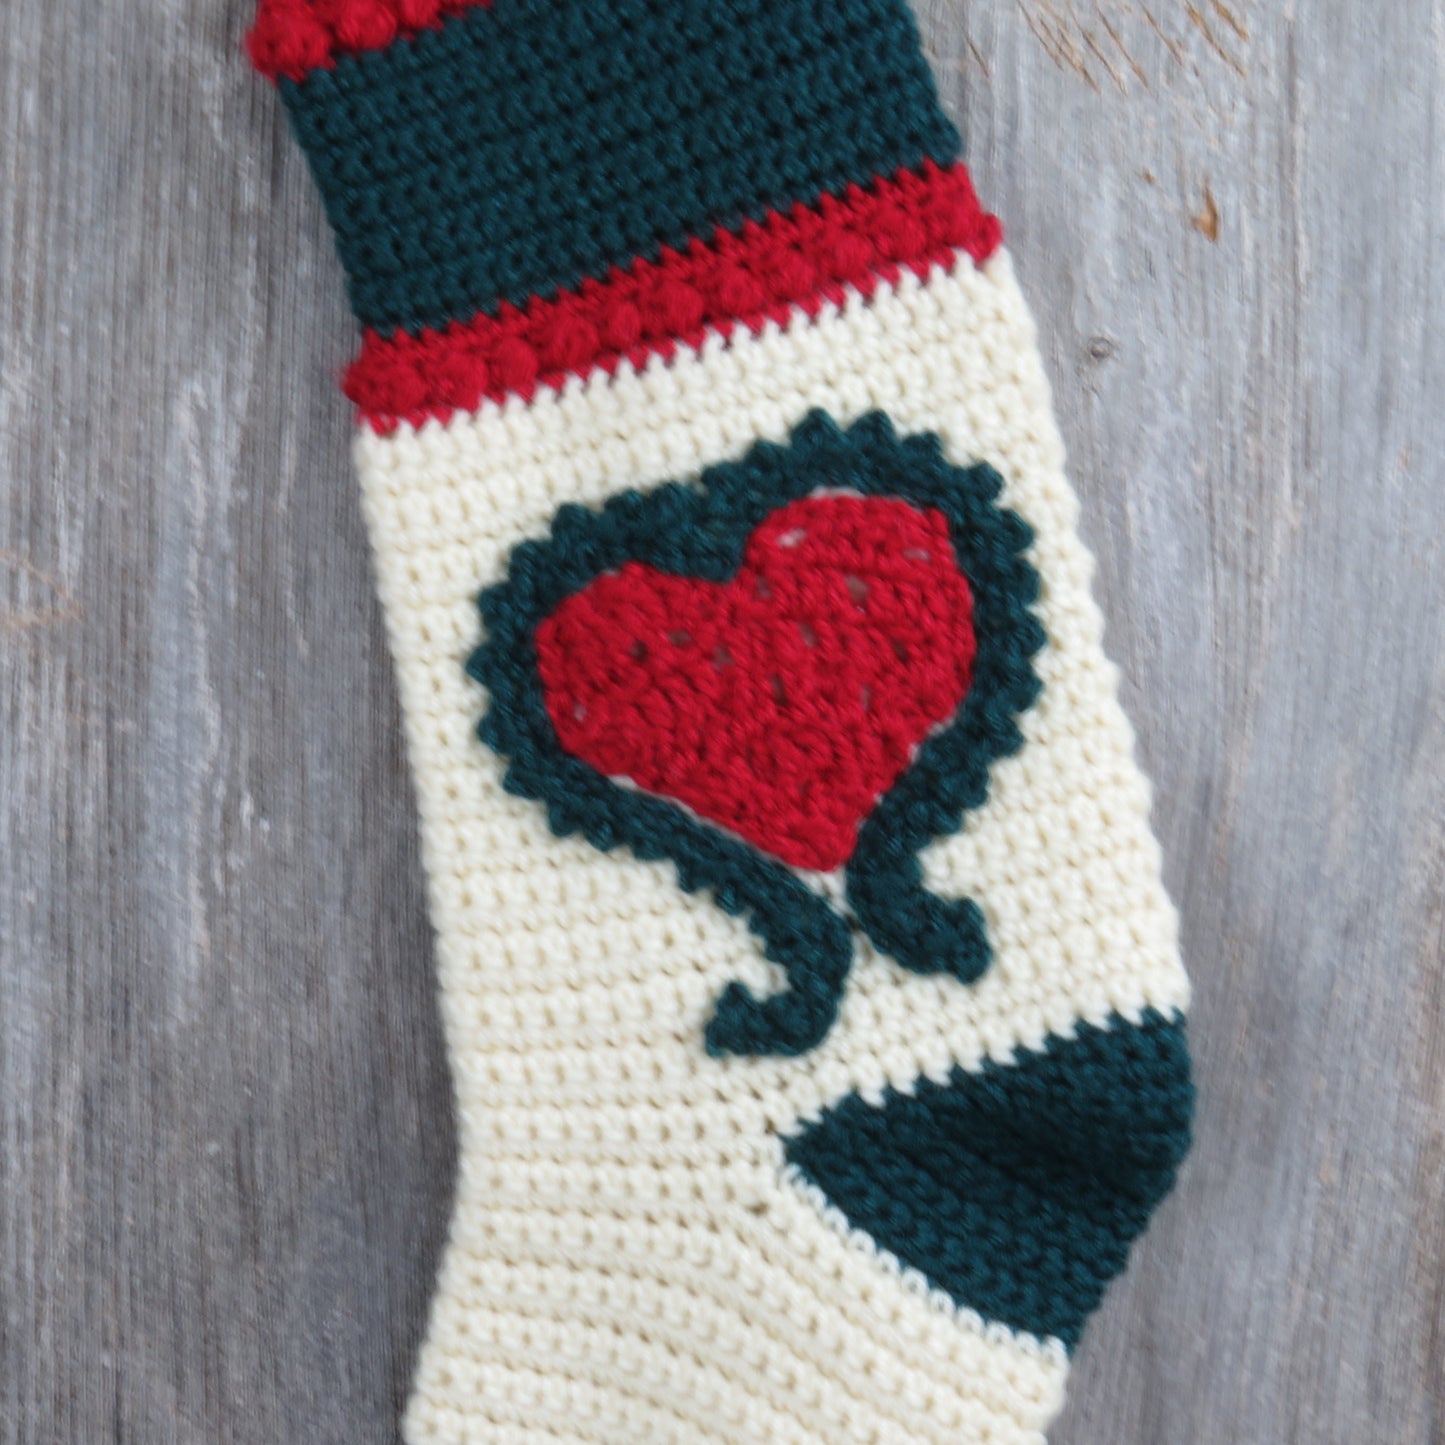 Vintage Handmade Heart Stocking Crochet Christmas Red Green White ST125 Holiday Decor - At Grandma's Table